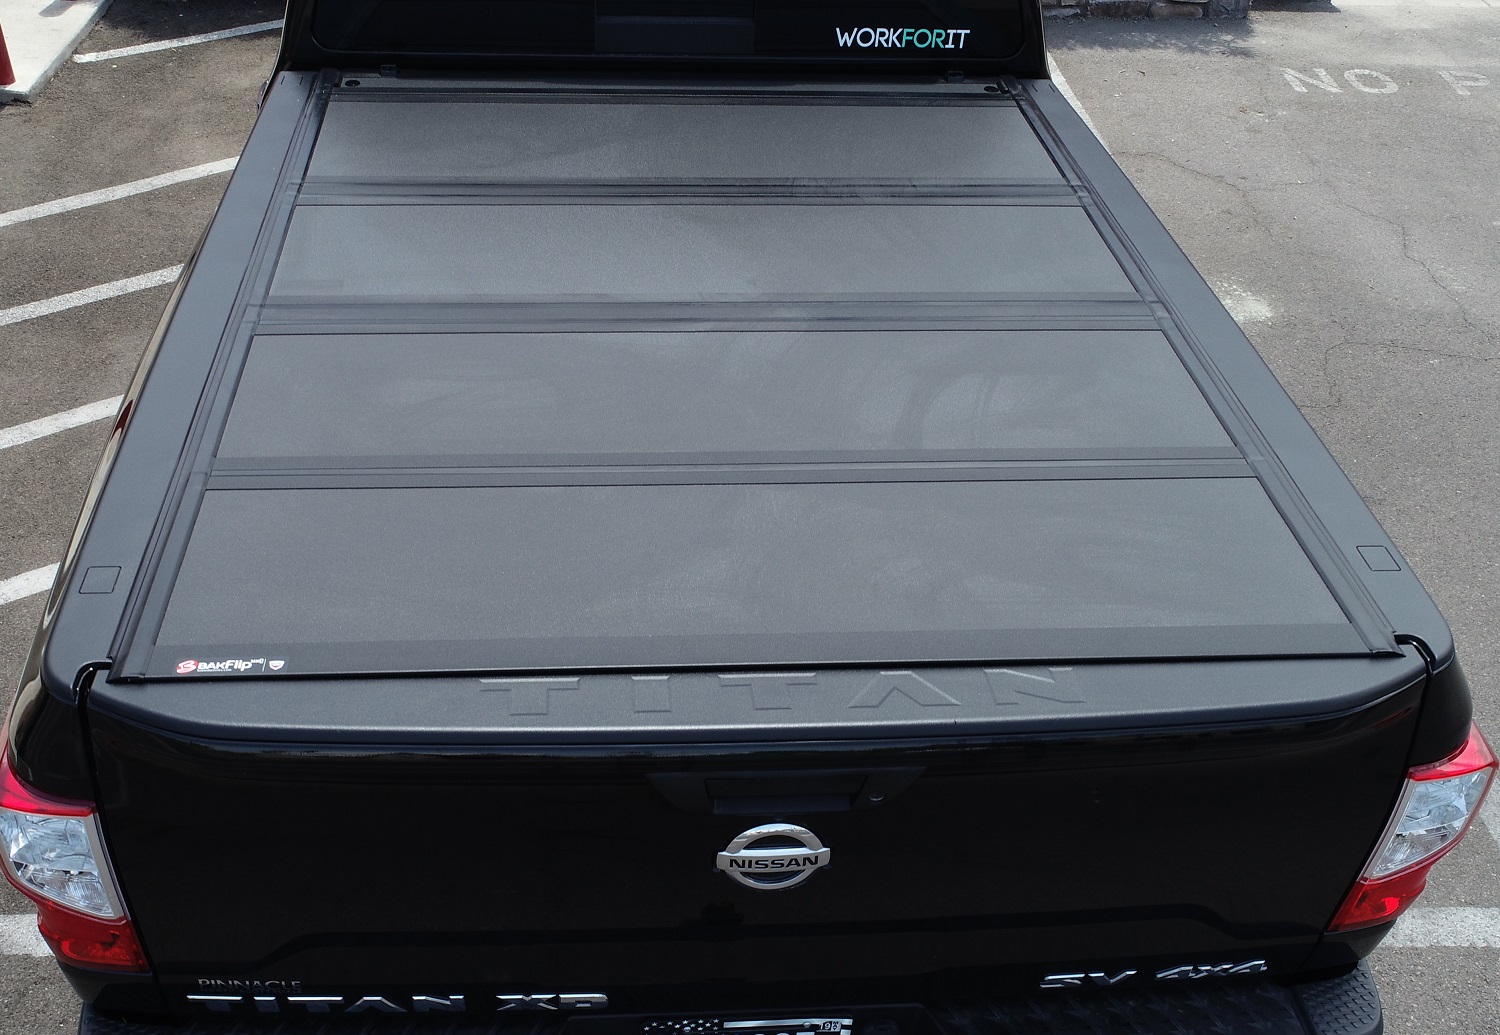 6 1/2 ft Bed Gator ETX Soft Tri-Fold Truck Bed Tonneau Cover fits Nissan Titan XD 2016-19 59511